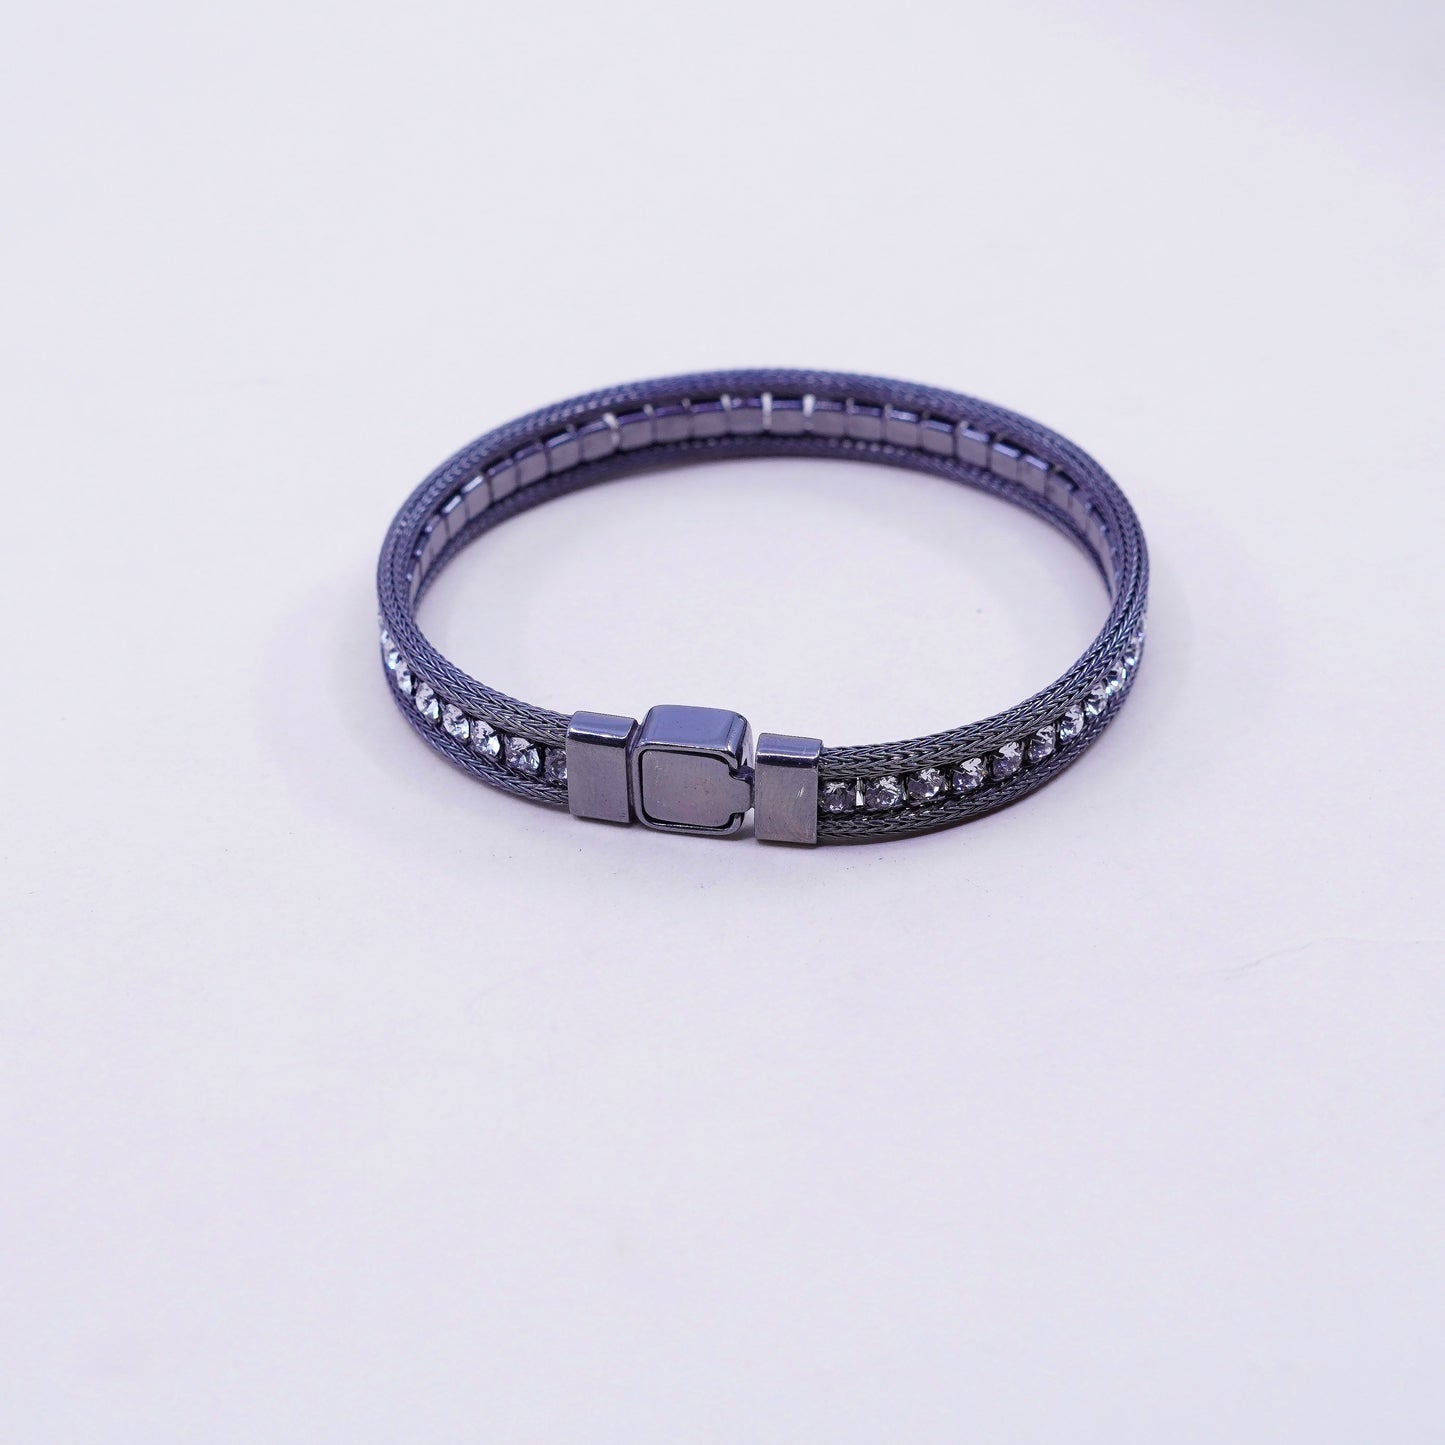 6.75”, vtg Italy sterling silver bracelet, oxidized 925 double wheat chain cz